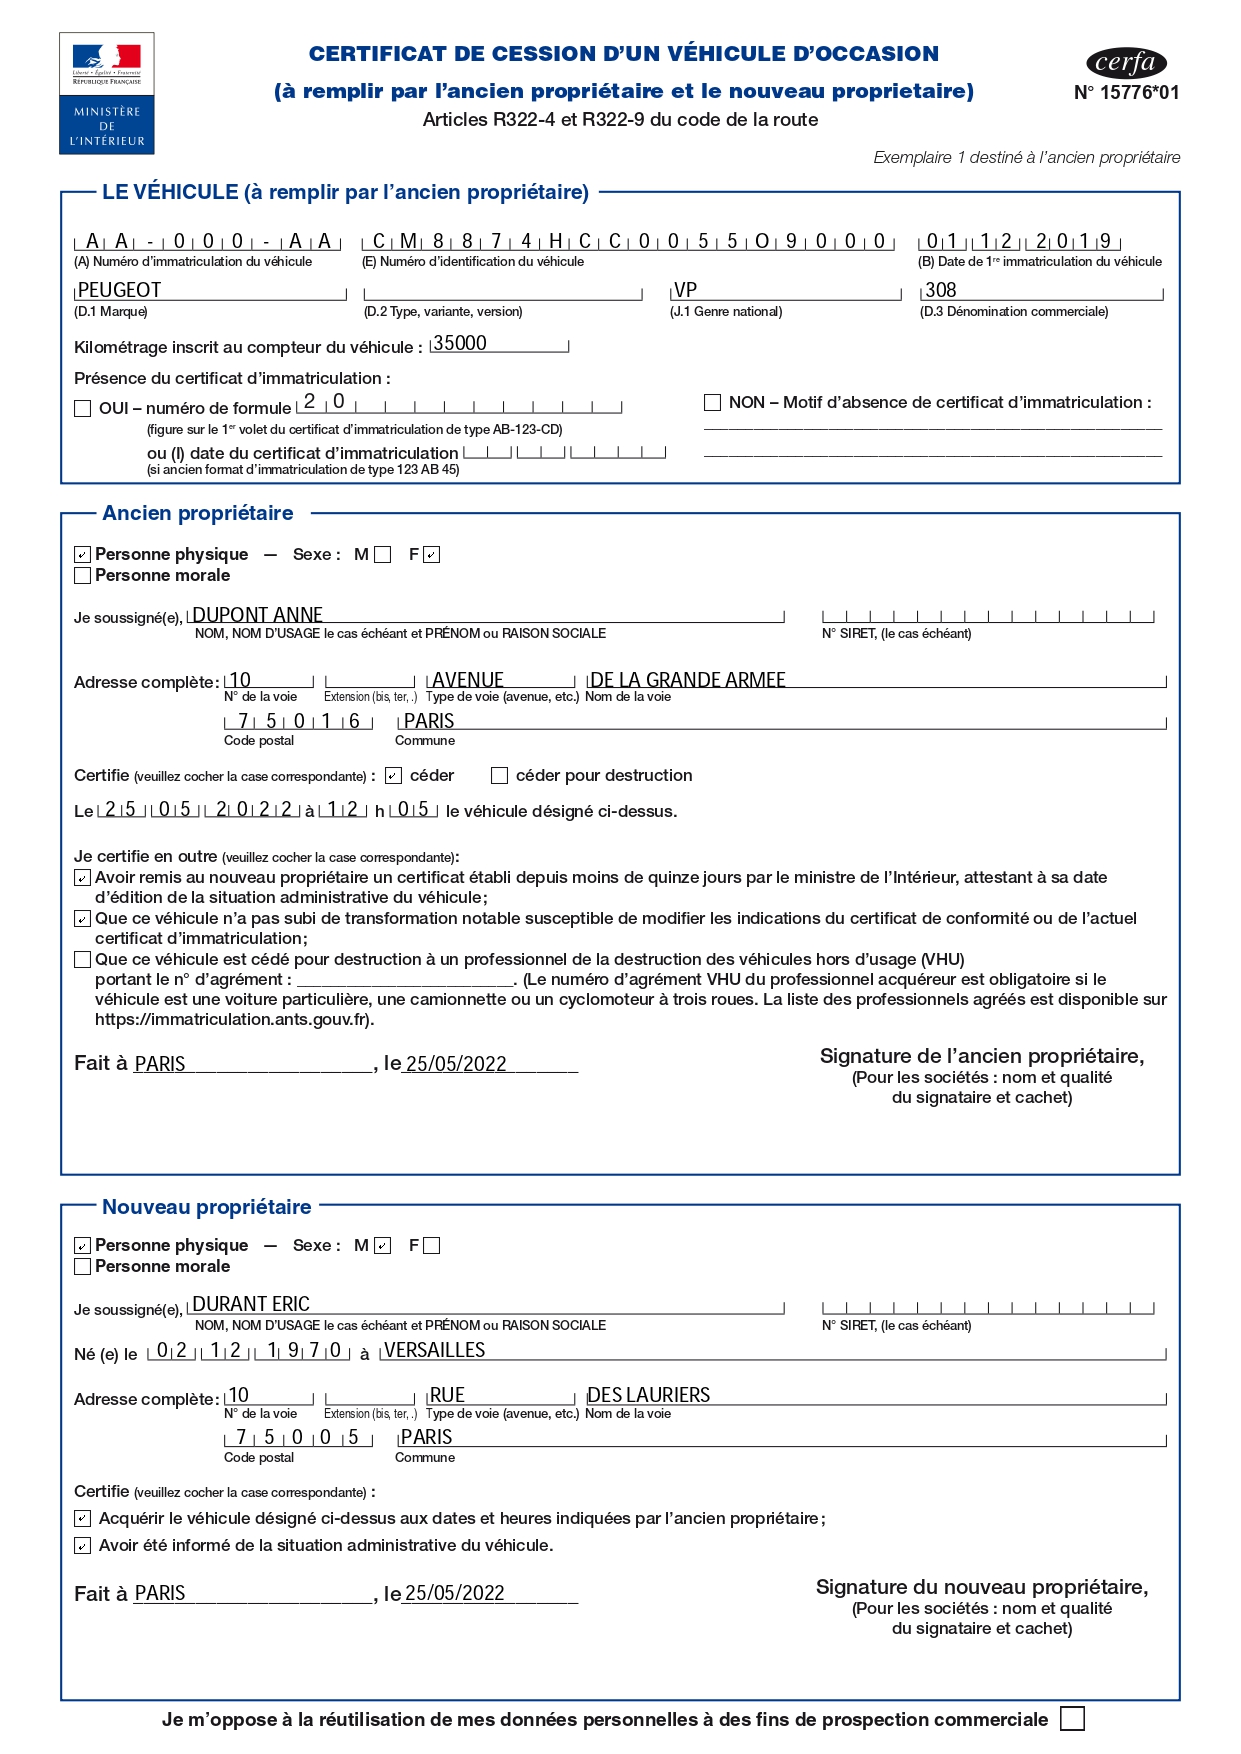 Exemple de certificat de cession rempli